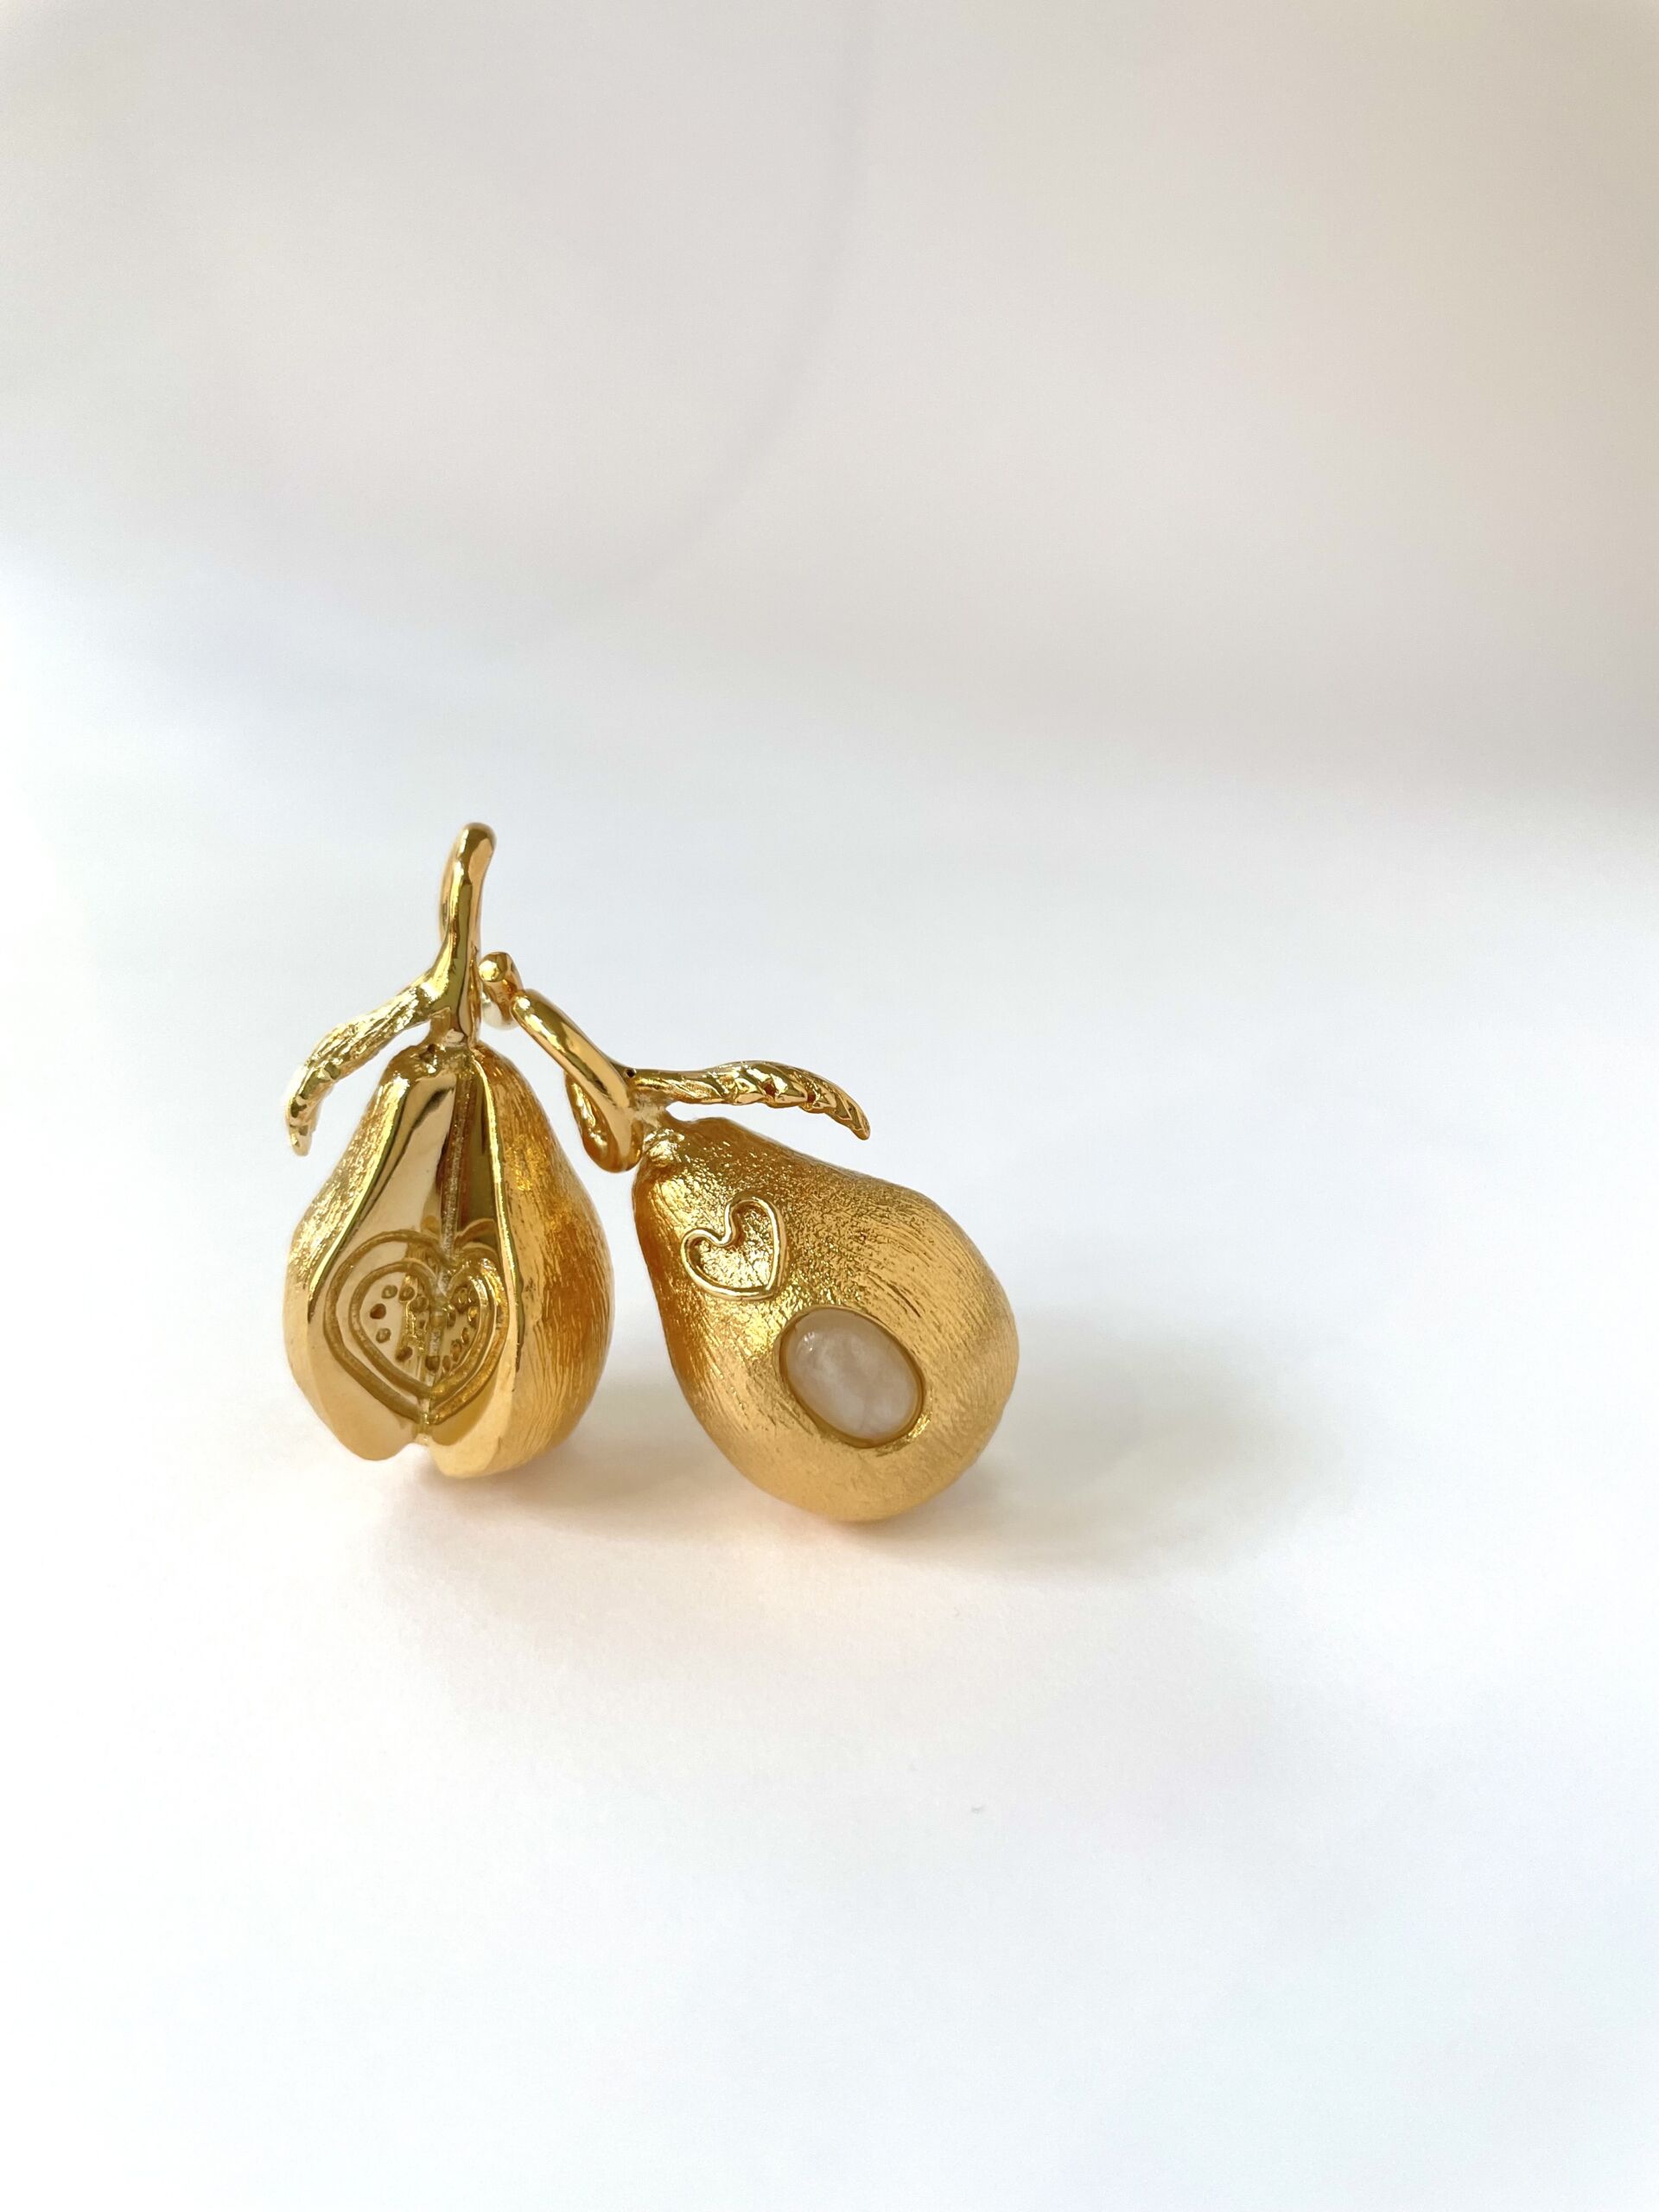 LOUISE neckalce Love's Pear collier Poire by SANDE PARIS Jewelry.